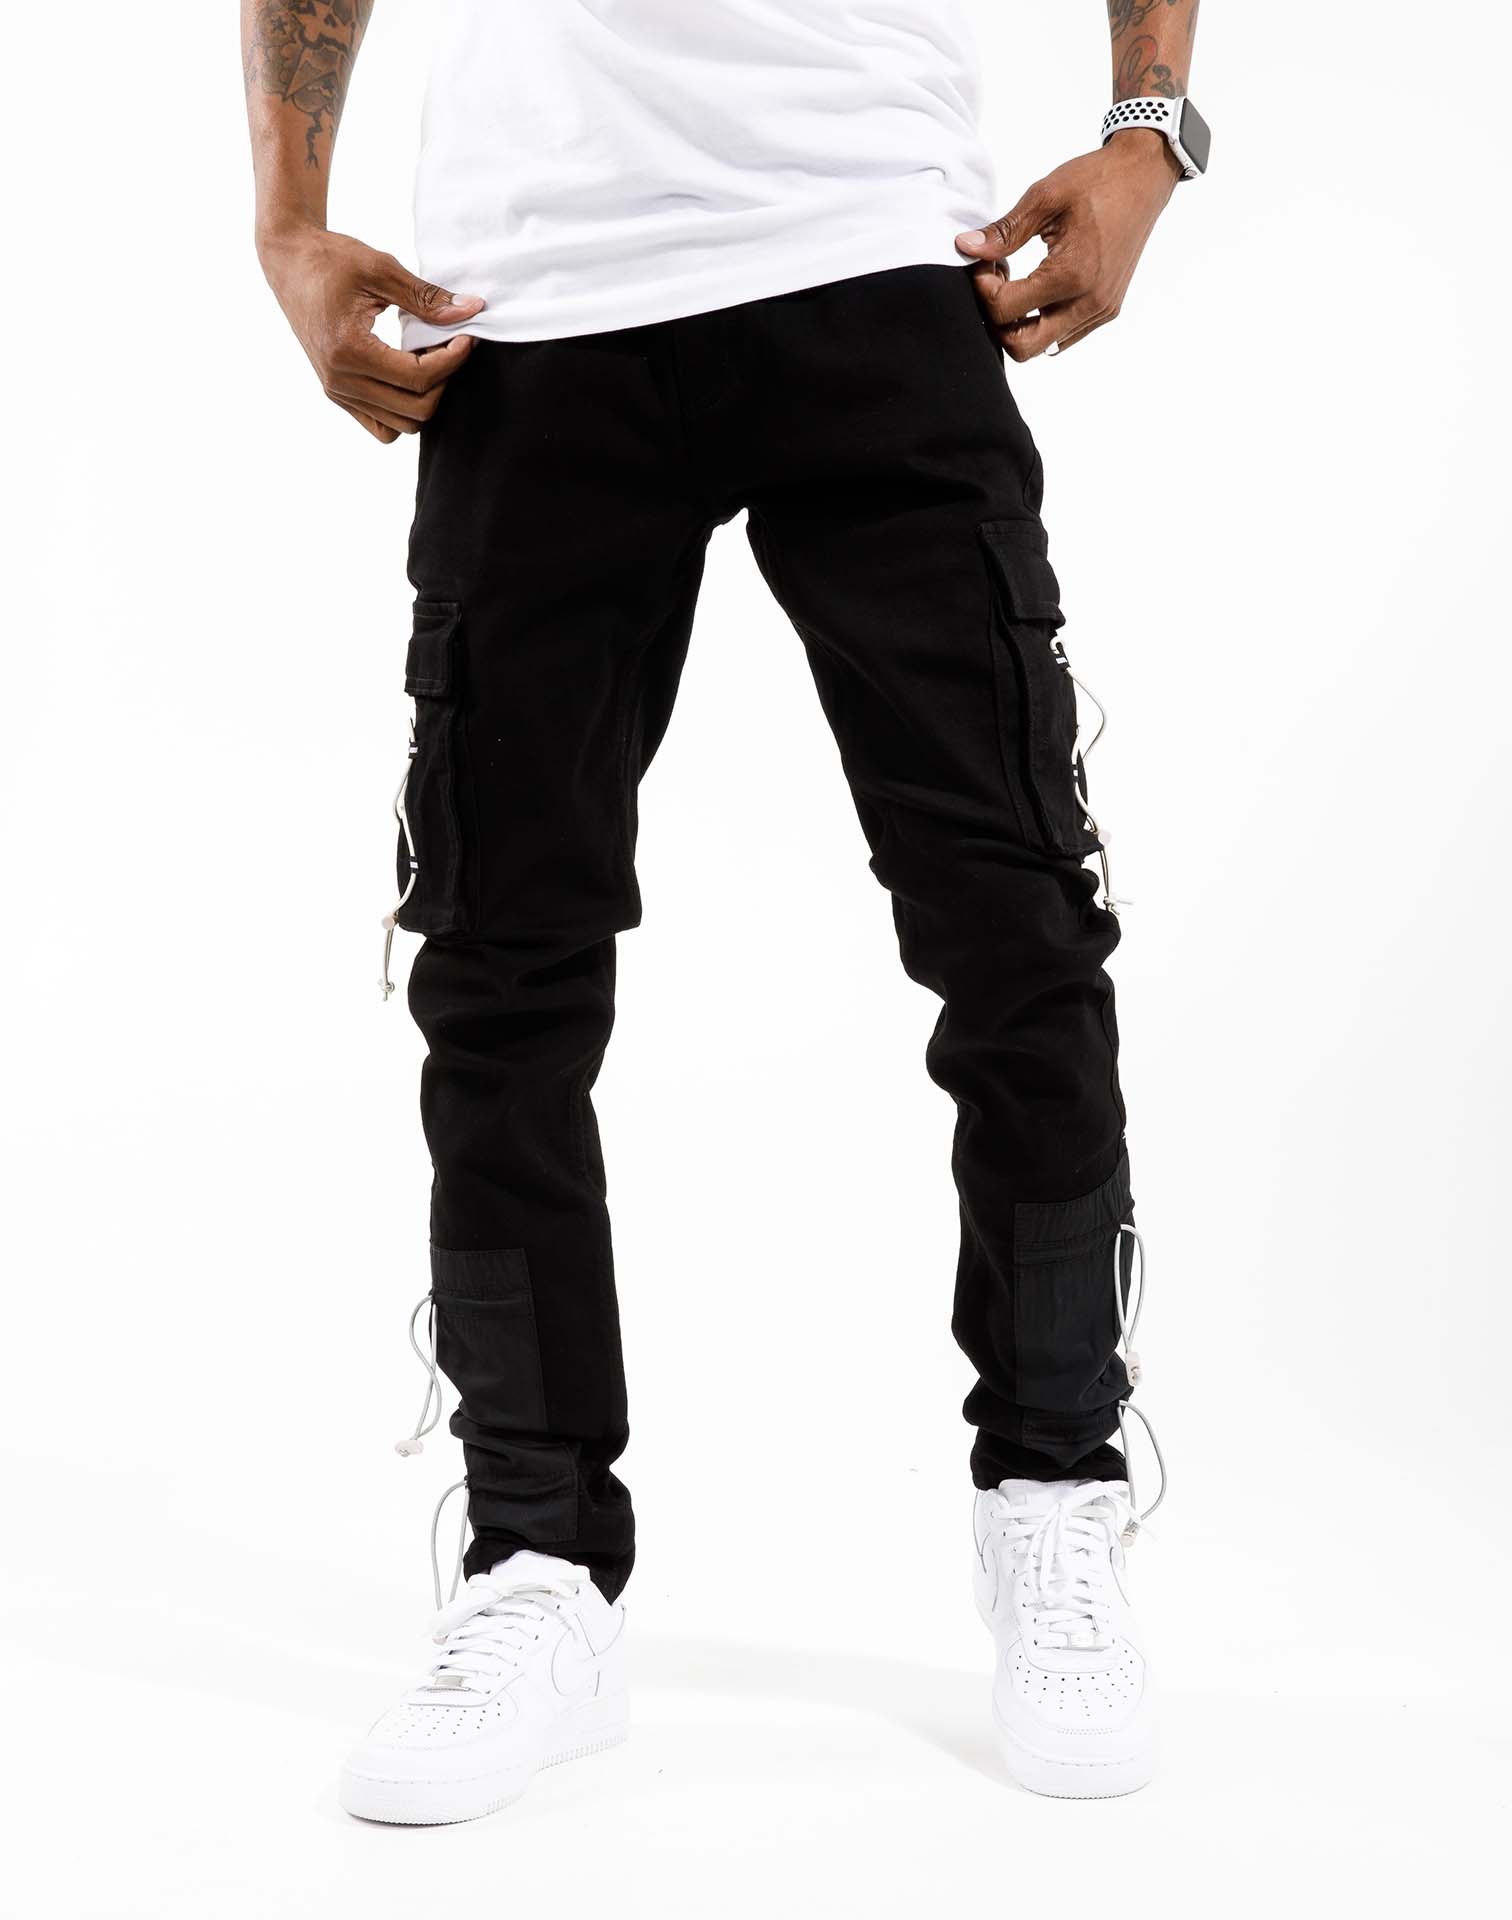 Jeans cargo para hombre😎✨ Disponible en color negro y celeste Gs. 135.000  . . . #menfashion #jeanscargo #jeans